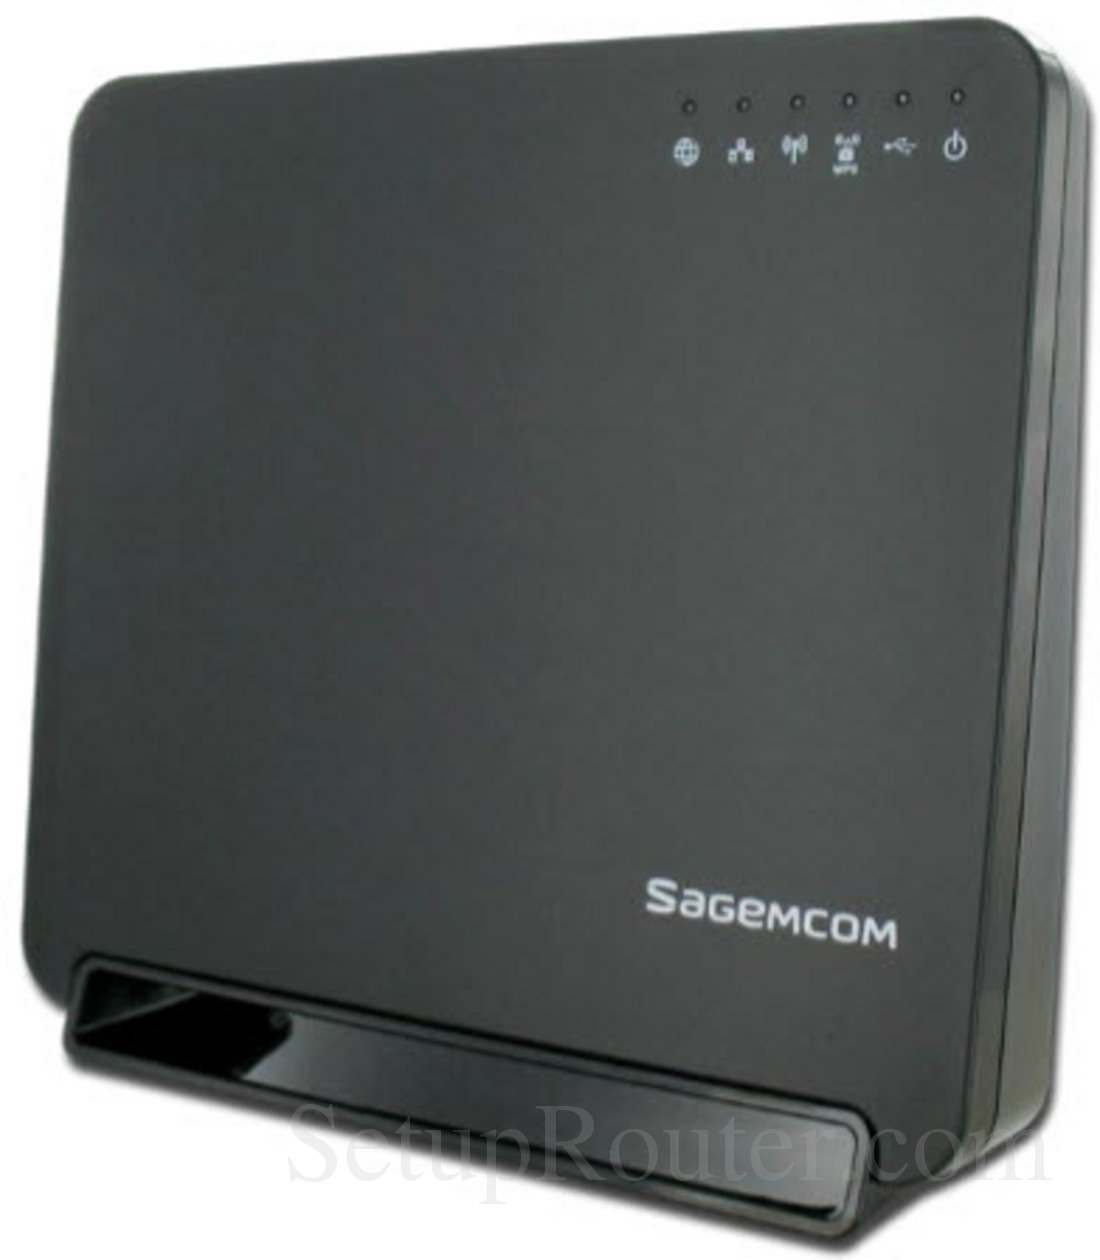 Sagemcom Fast 5260 Screenshot sagemcomfast5260